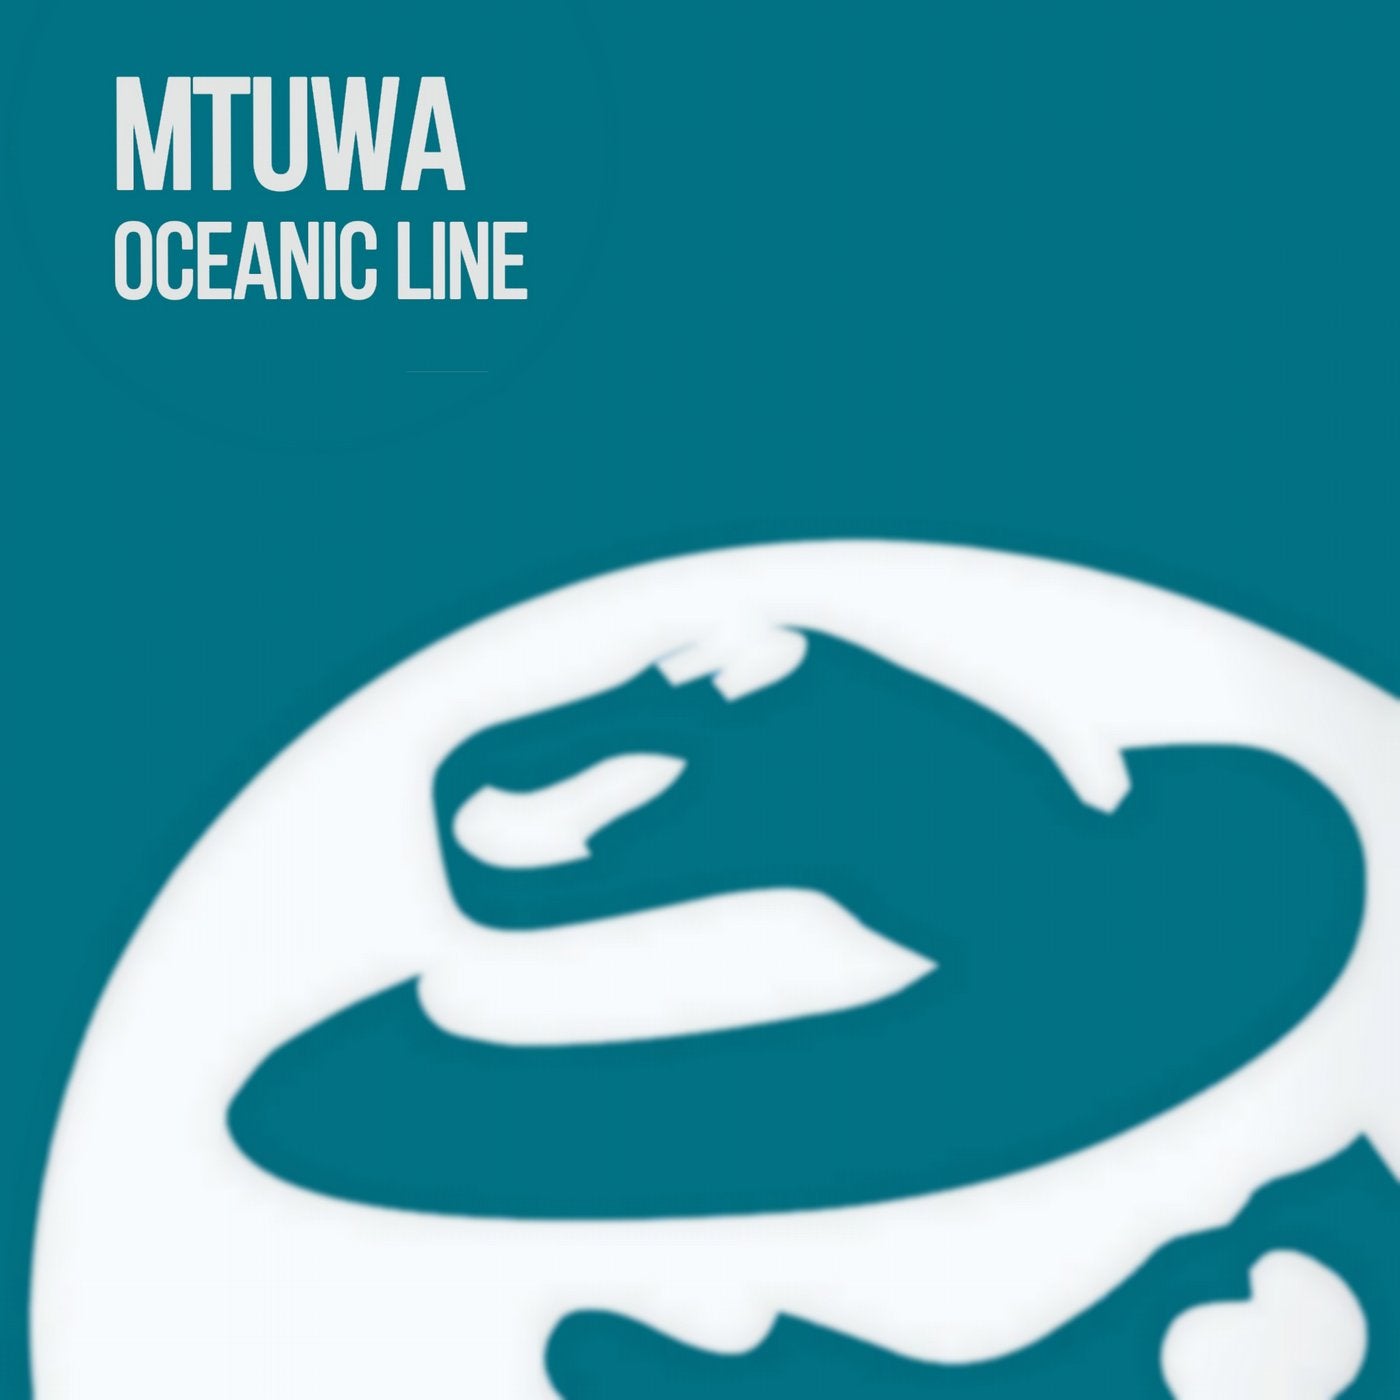 Oceanic Line